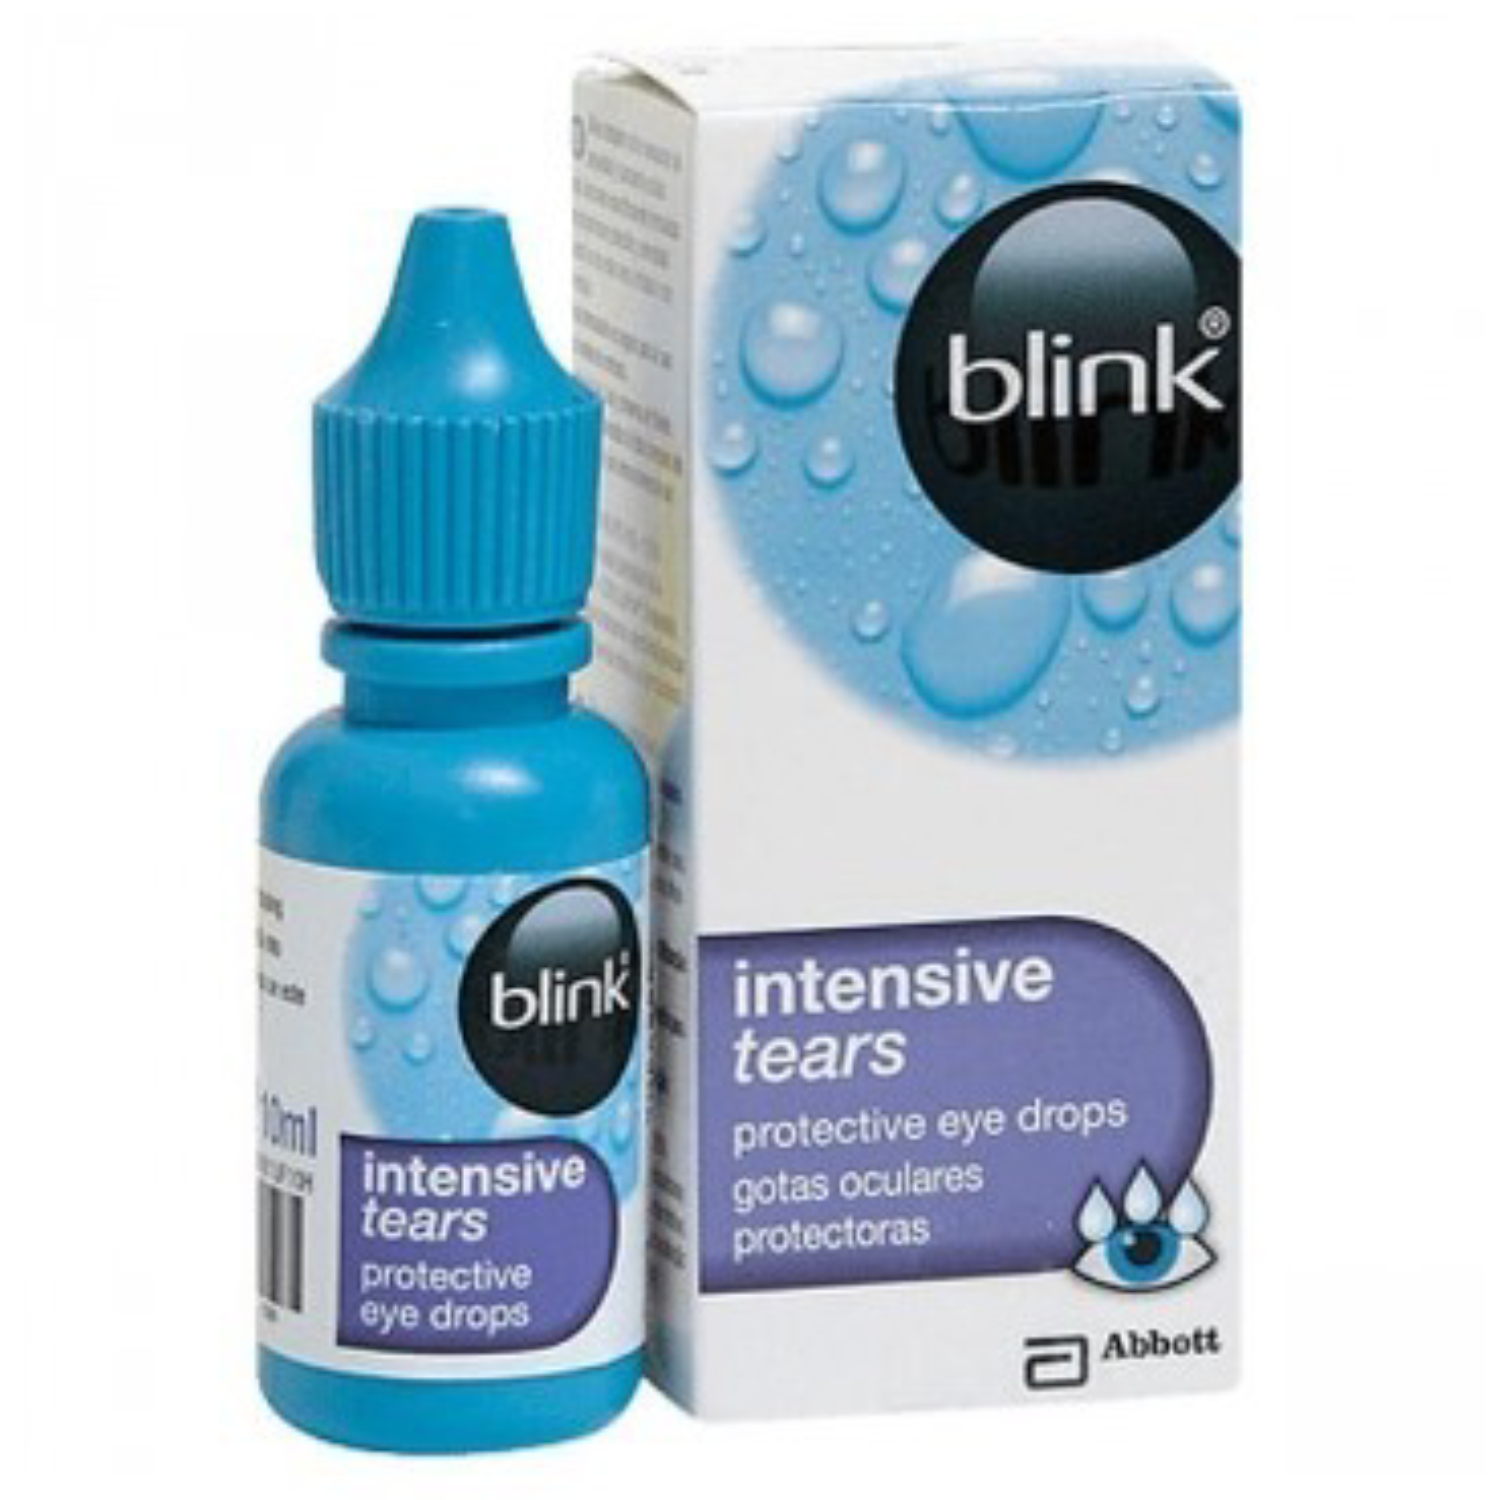 BLINK INTENSIVE TEARS PROTECTIVE EYE DROPS 10 ML